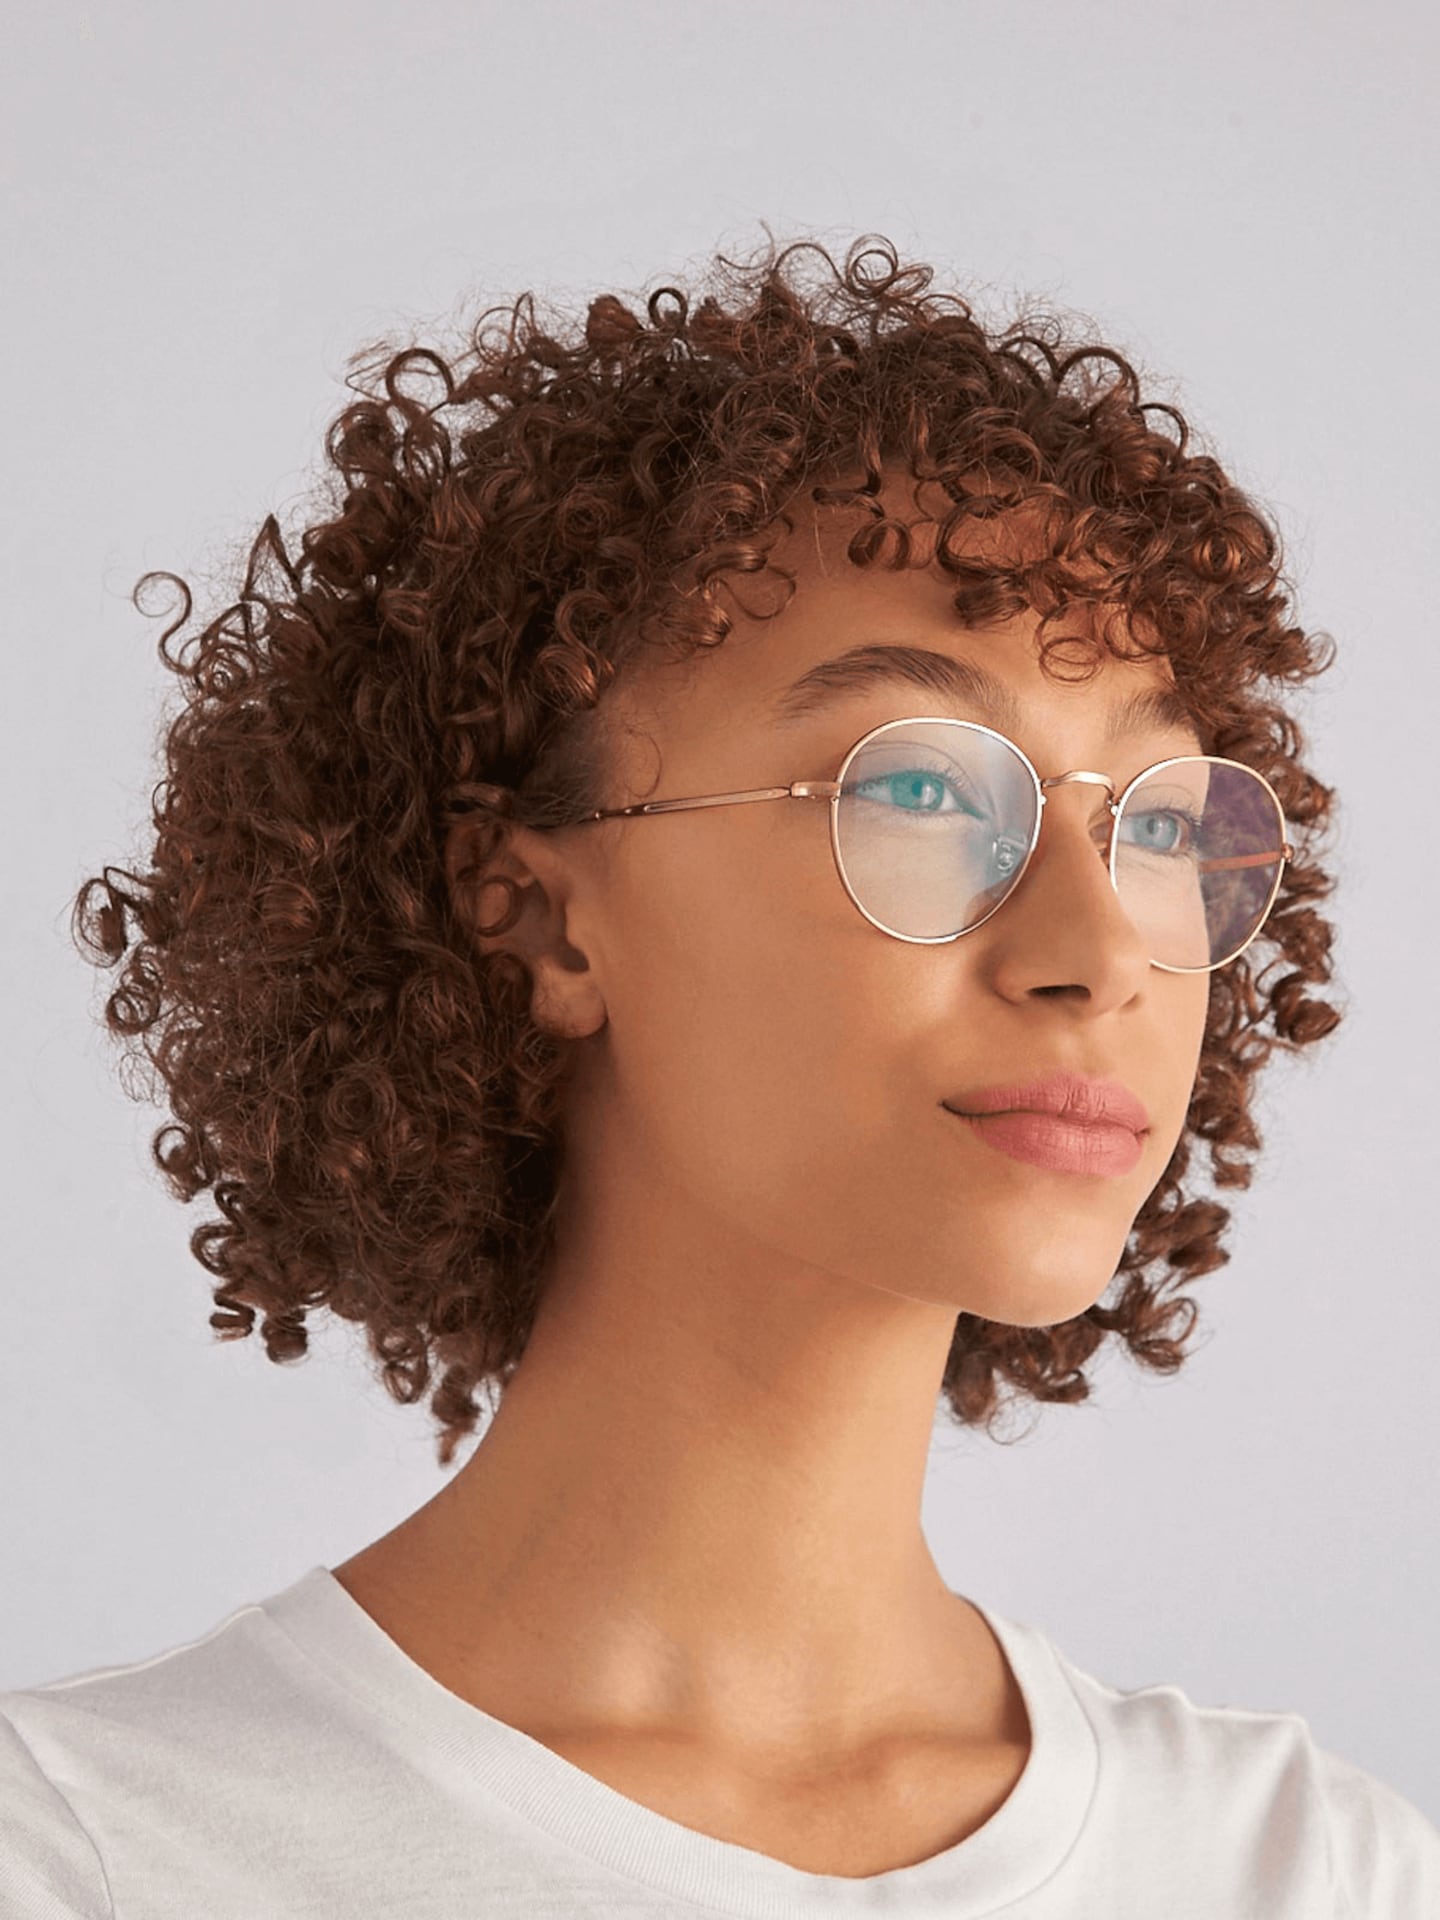 Ray-Ban Copper Eyeglasses | Glasses.com® | Free Shipping